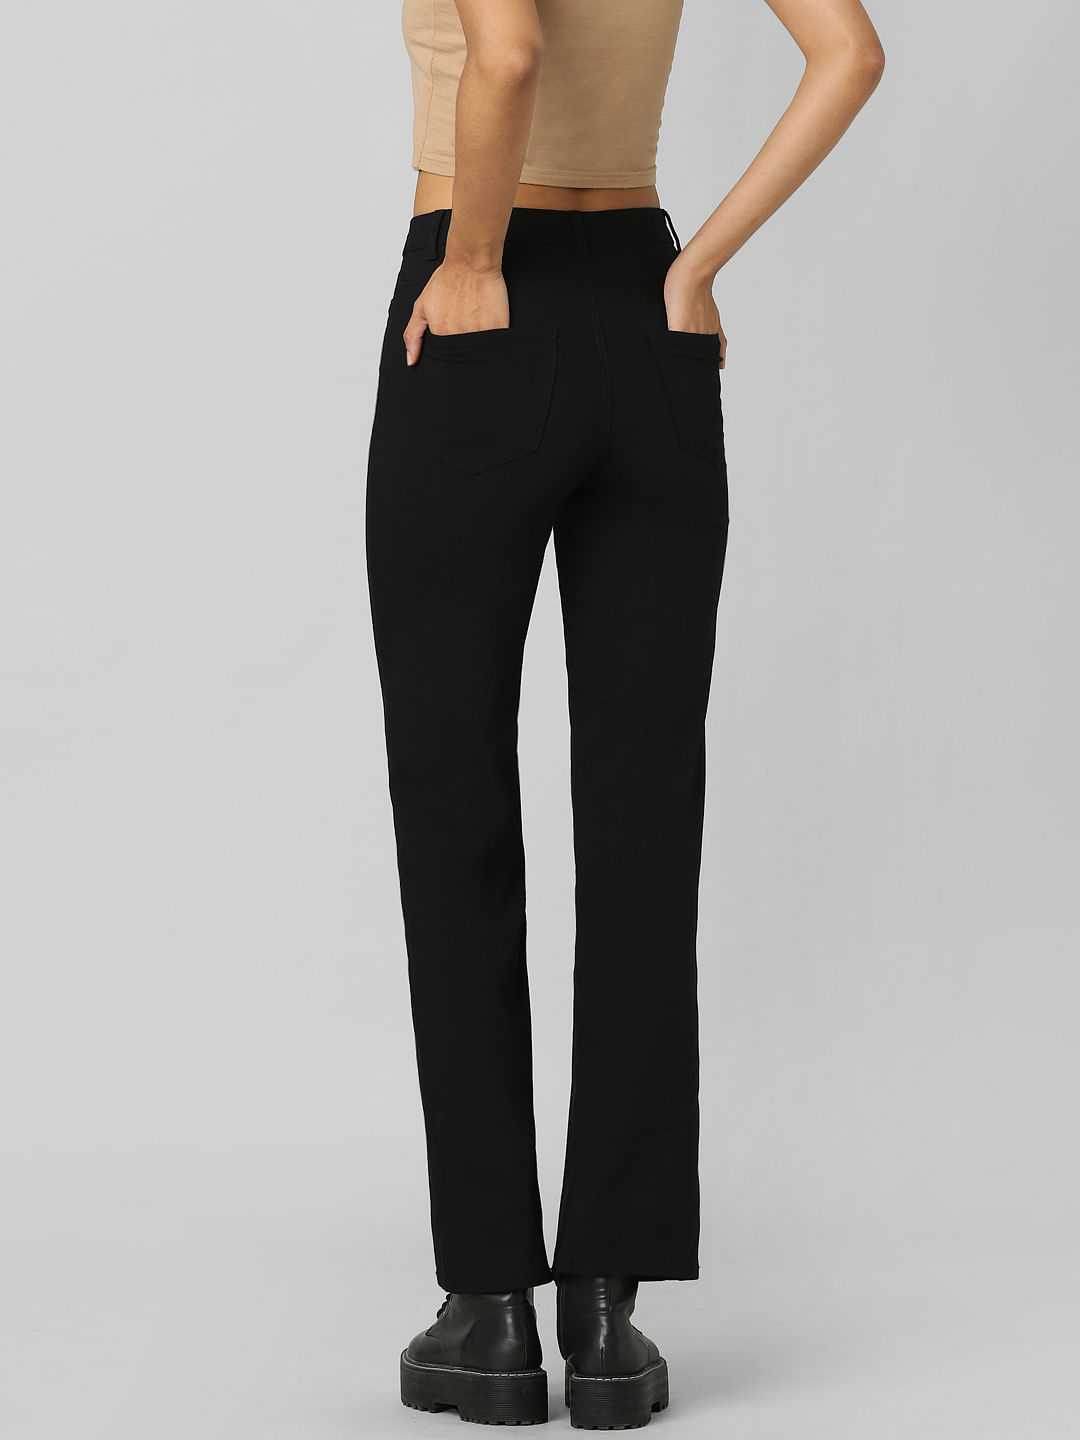 Buy Black Polyester Regular Fit Solid Parallel Trousers online  Looksgudin